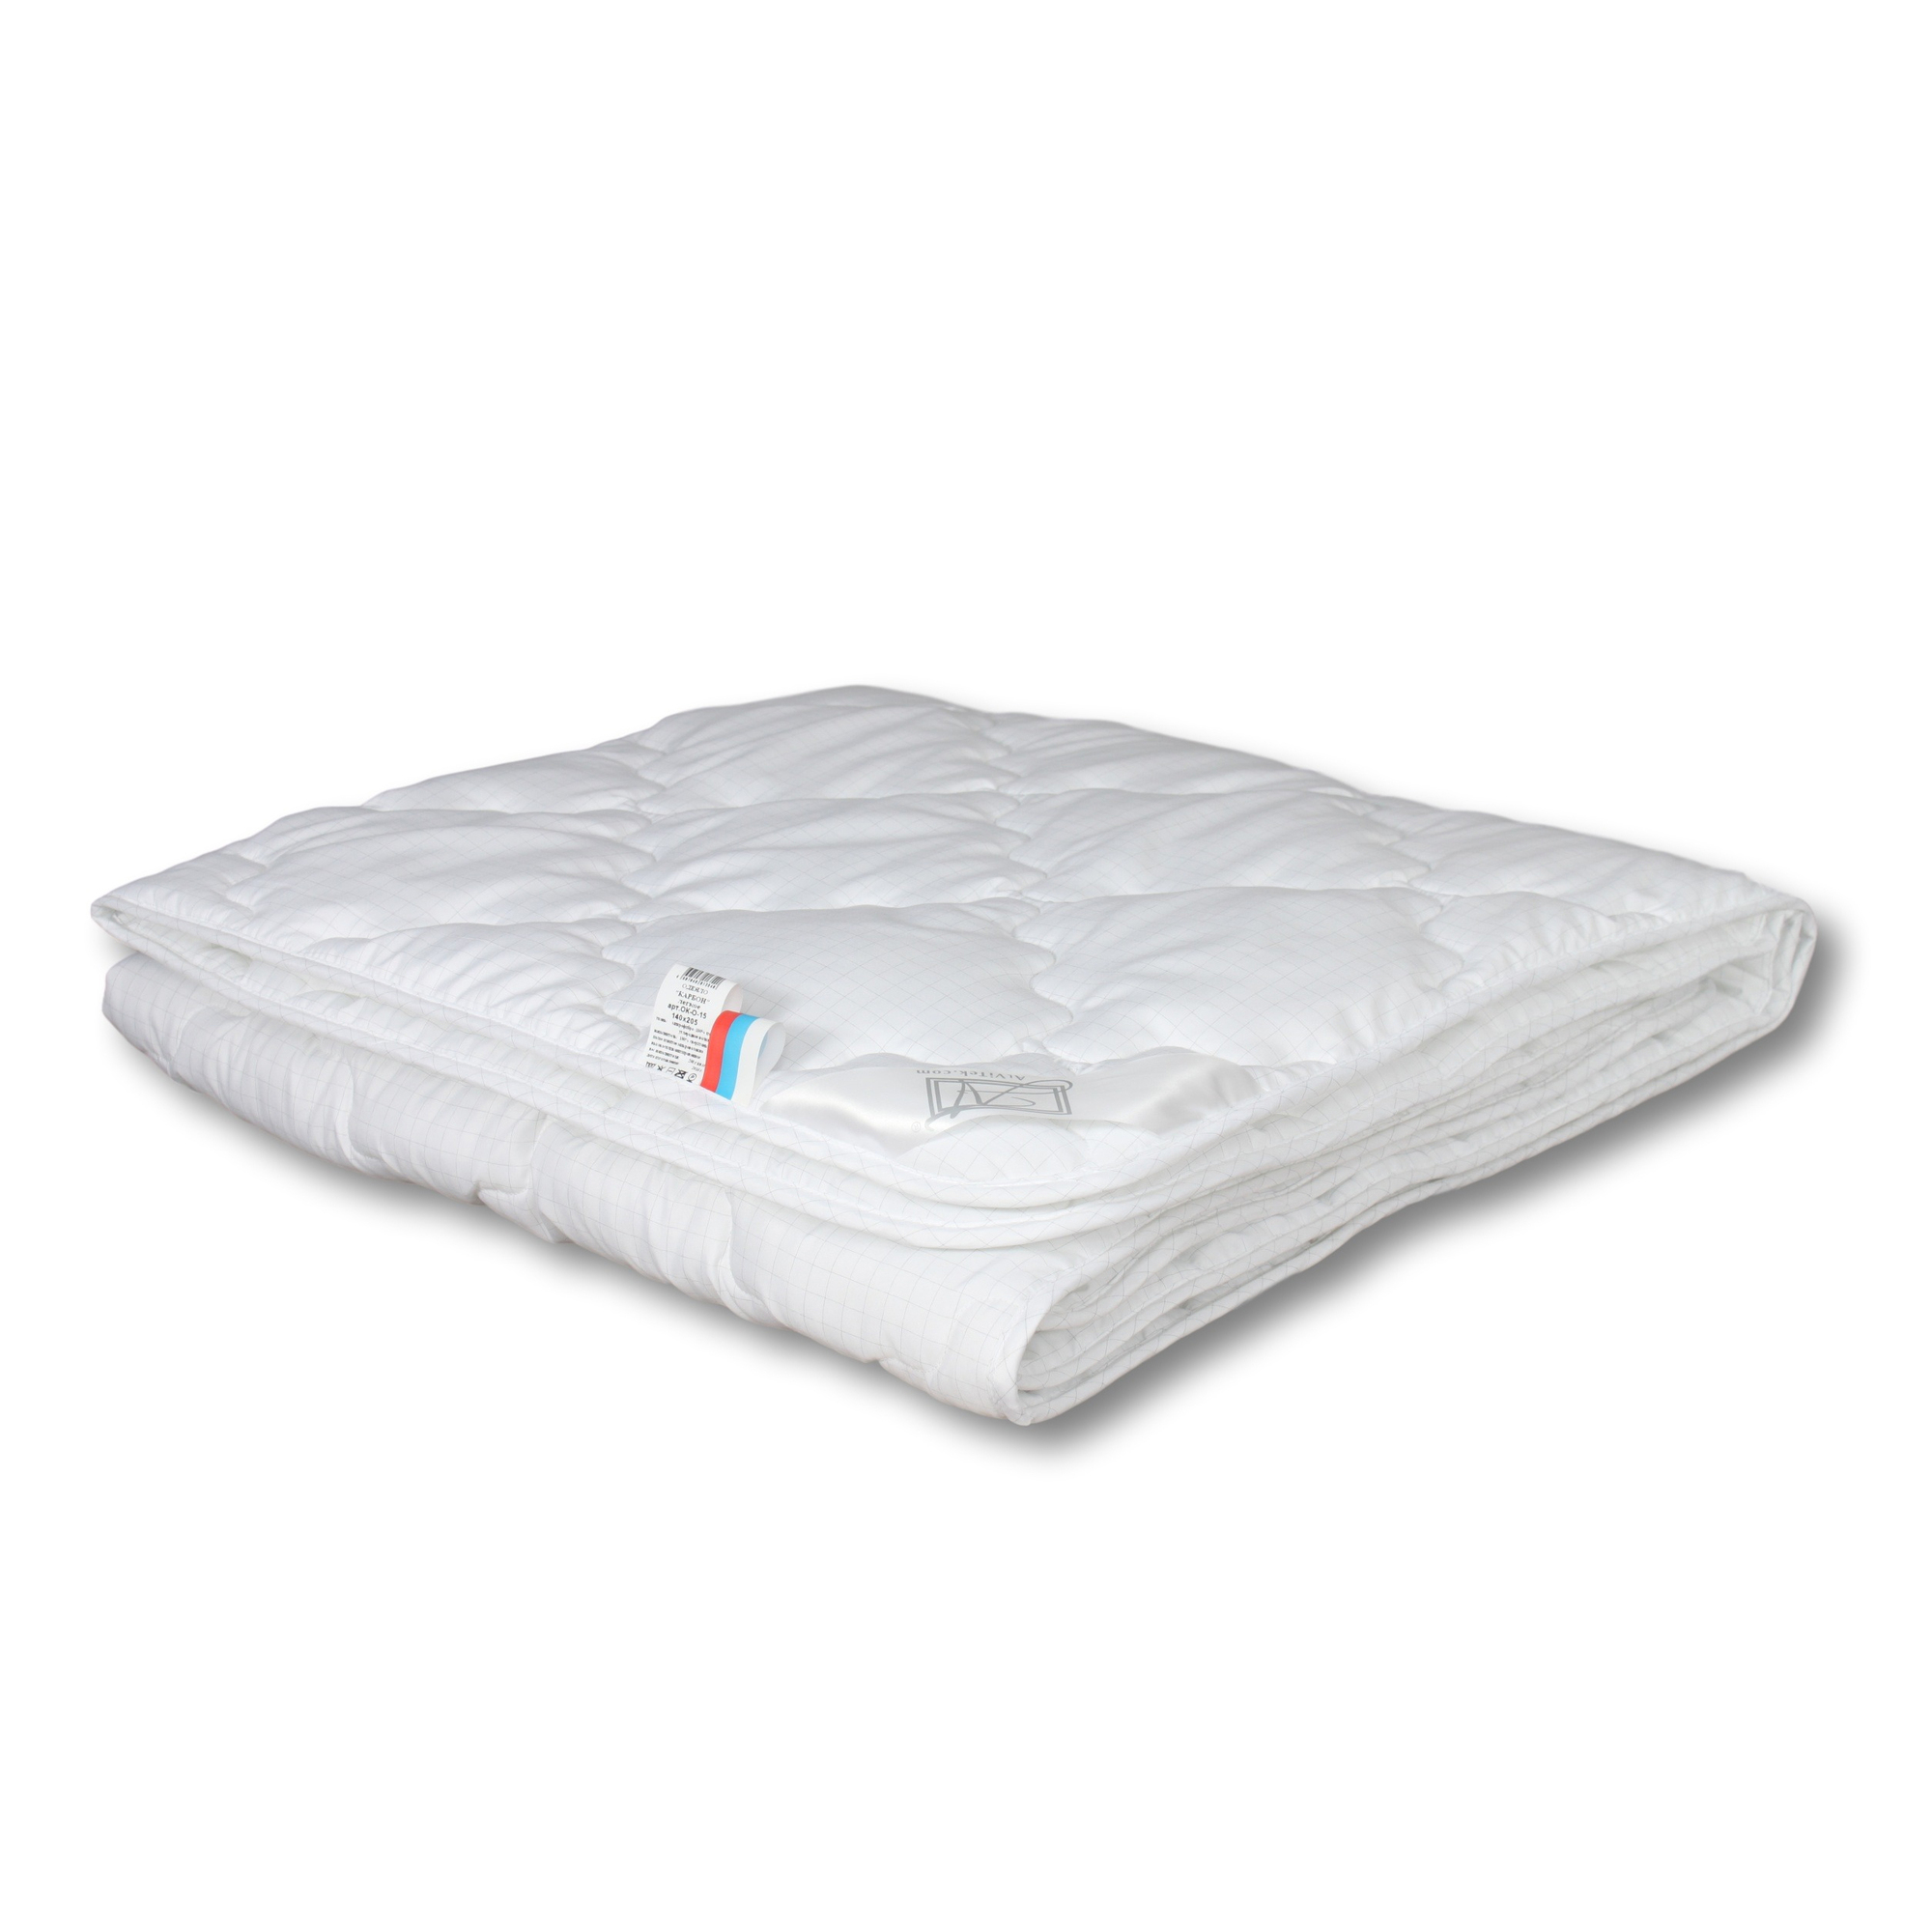 Одеяло Apple Всесезонное (140х205 см), размер 140х205 см, цвет белый avt228707 Одеяло Apple Всесезонное (140х205 см) - фото 1